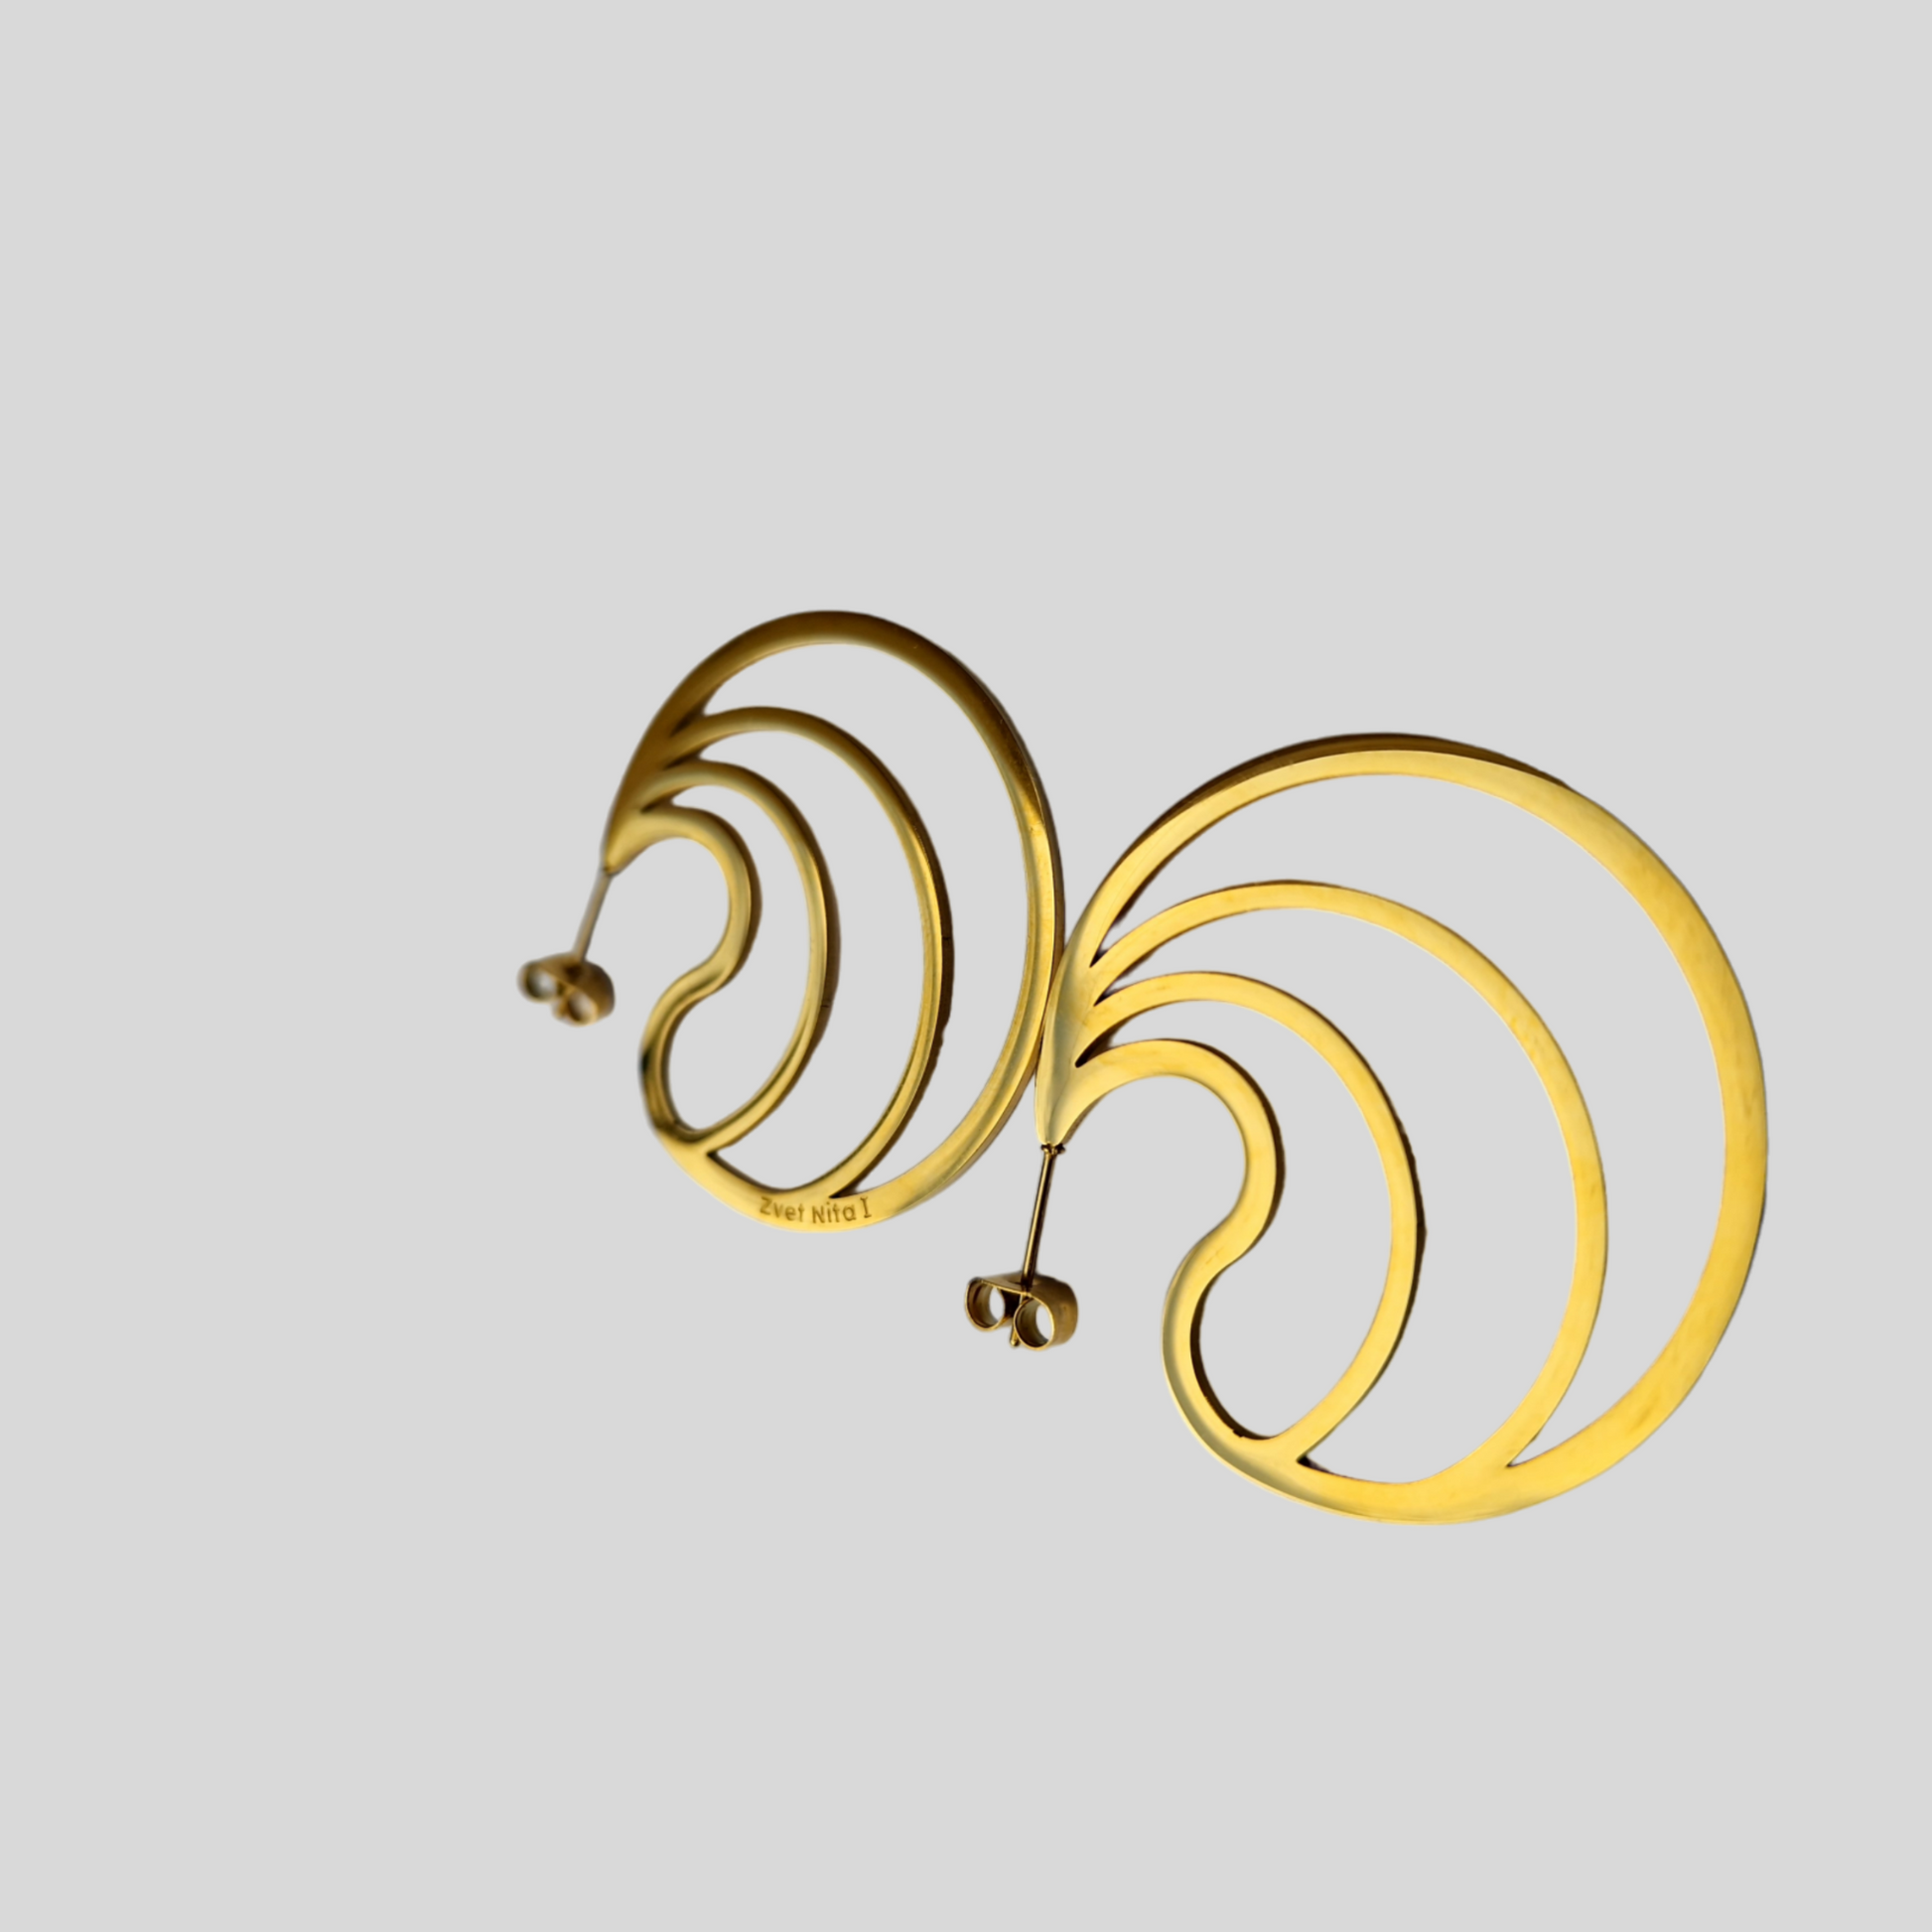 Zvet Gold plated earrings shaped like the moon